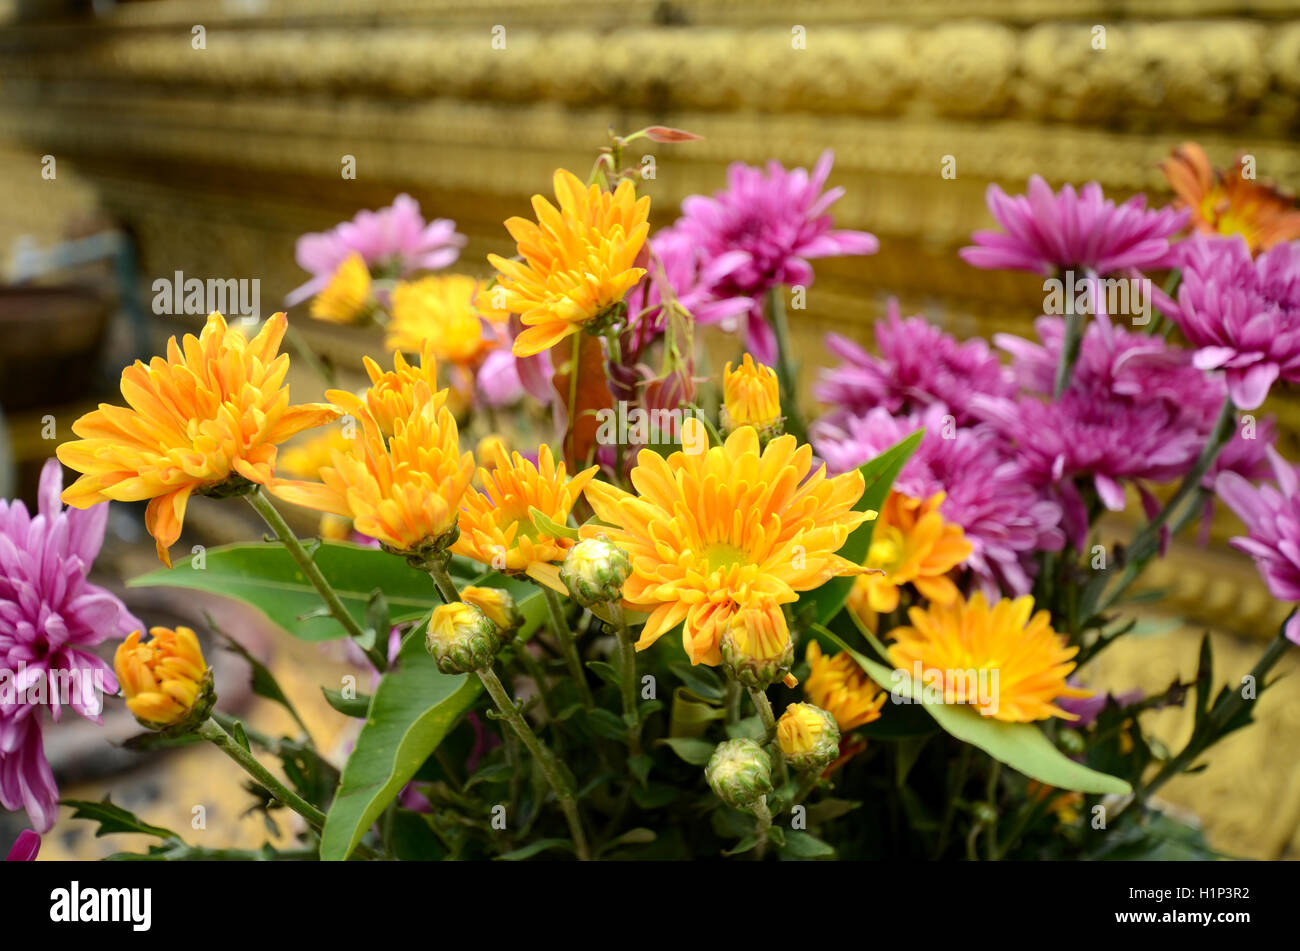 Spray Type of Chrysanthemum (Dendranthemum grandifflora) in closed-up. Stock Photo